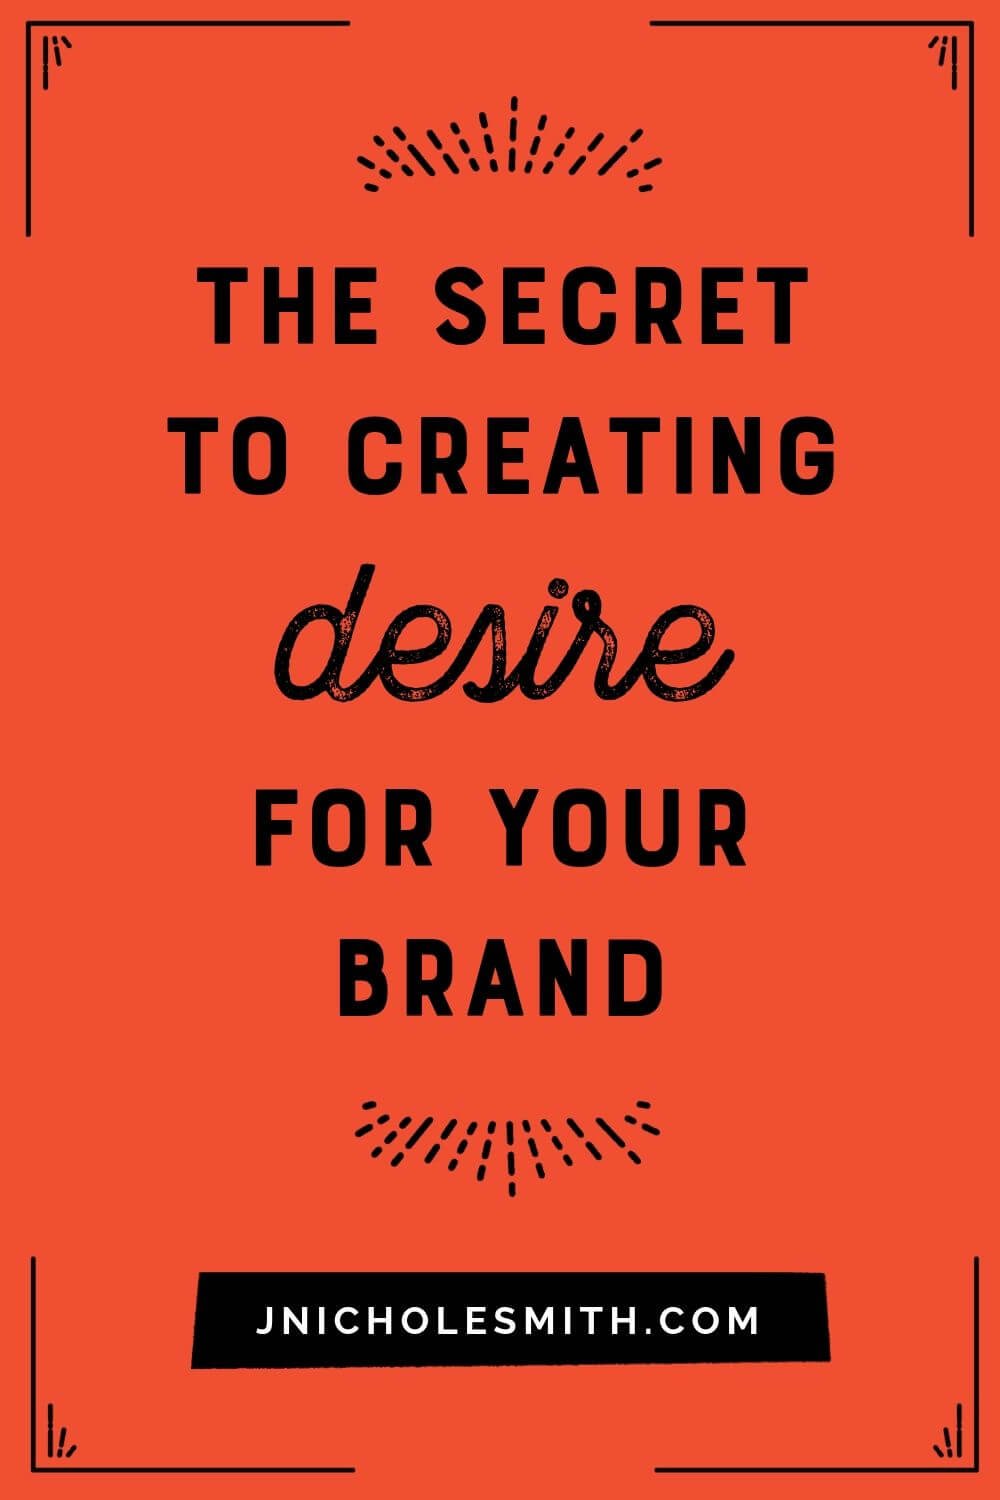 Build brand desire pin image